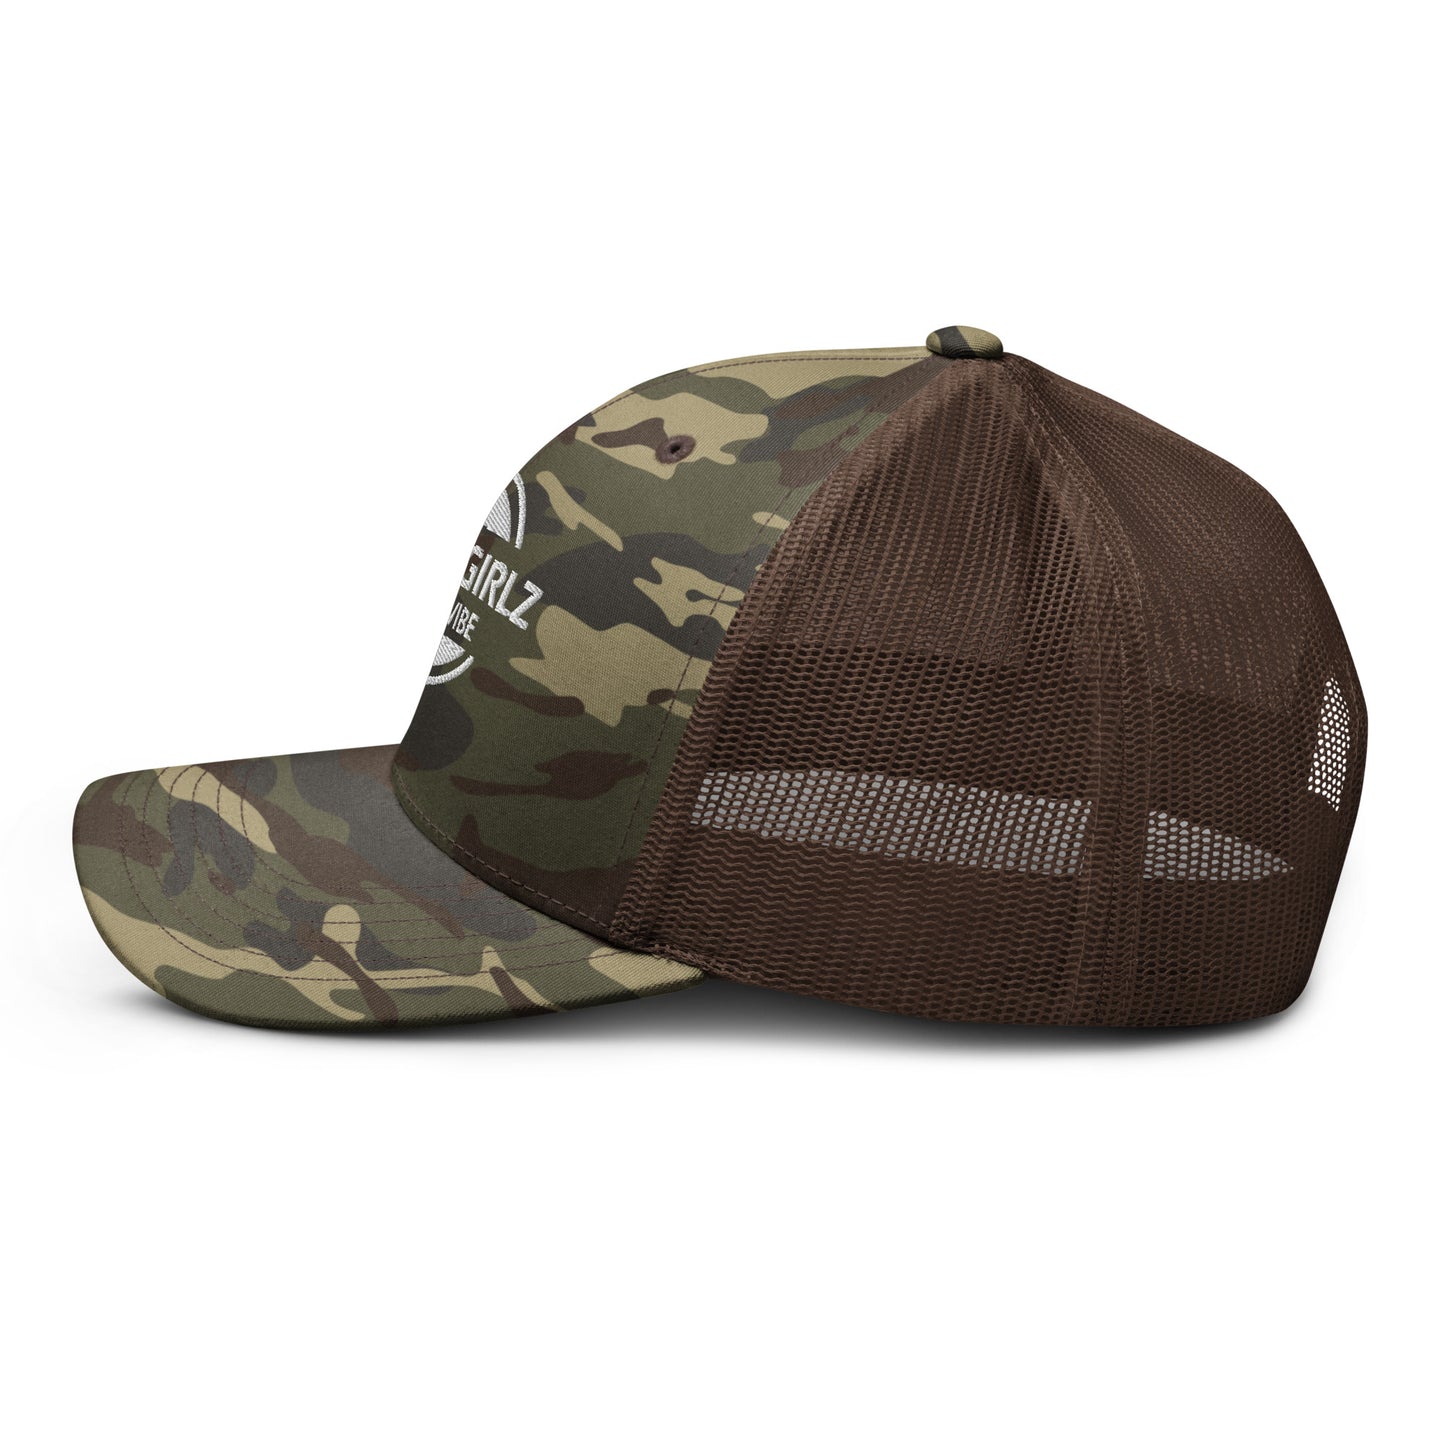 DUNE GIRLZ Camouflage trucker hat